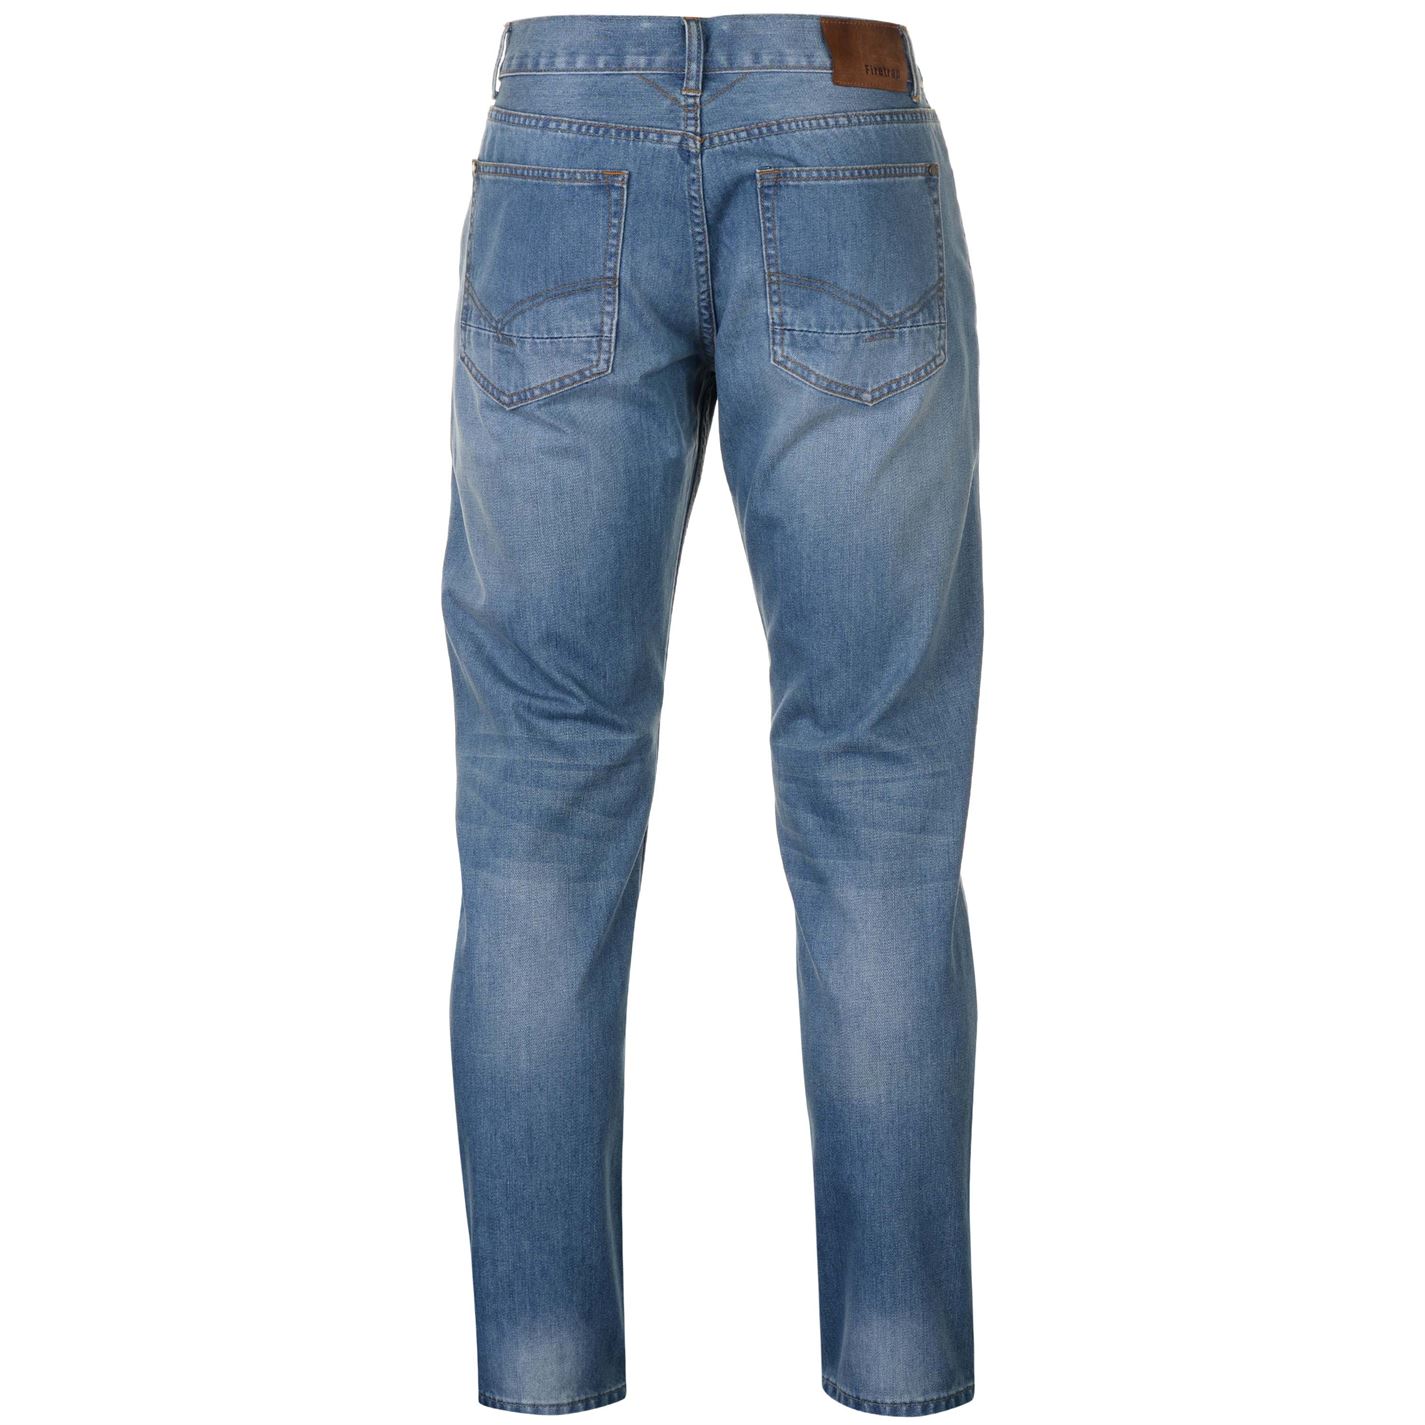 Firetrap Rom Jeans Cotton Slightly Distressed Look Mens Gents | eBay